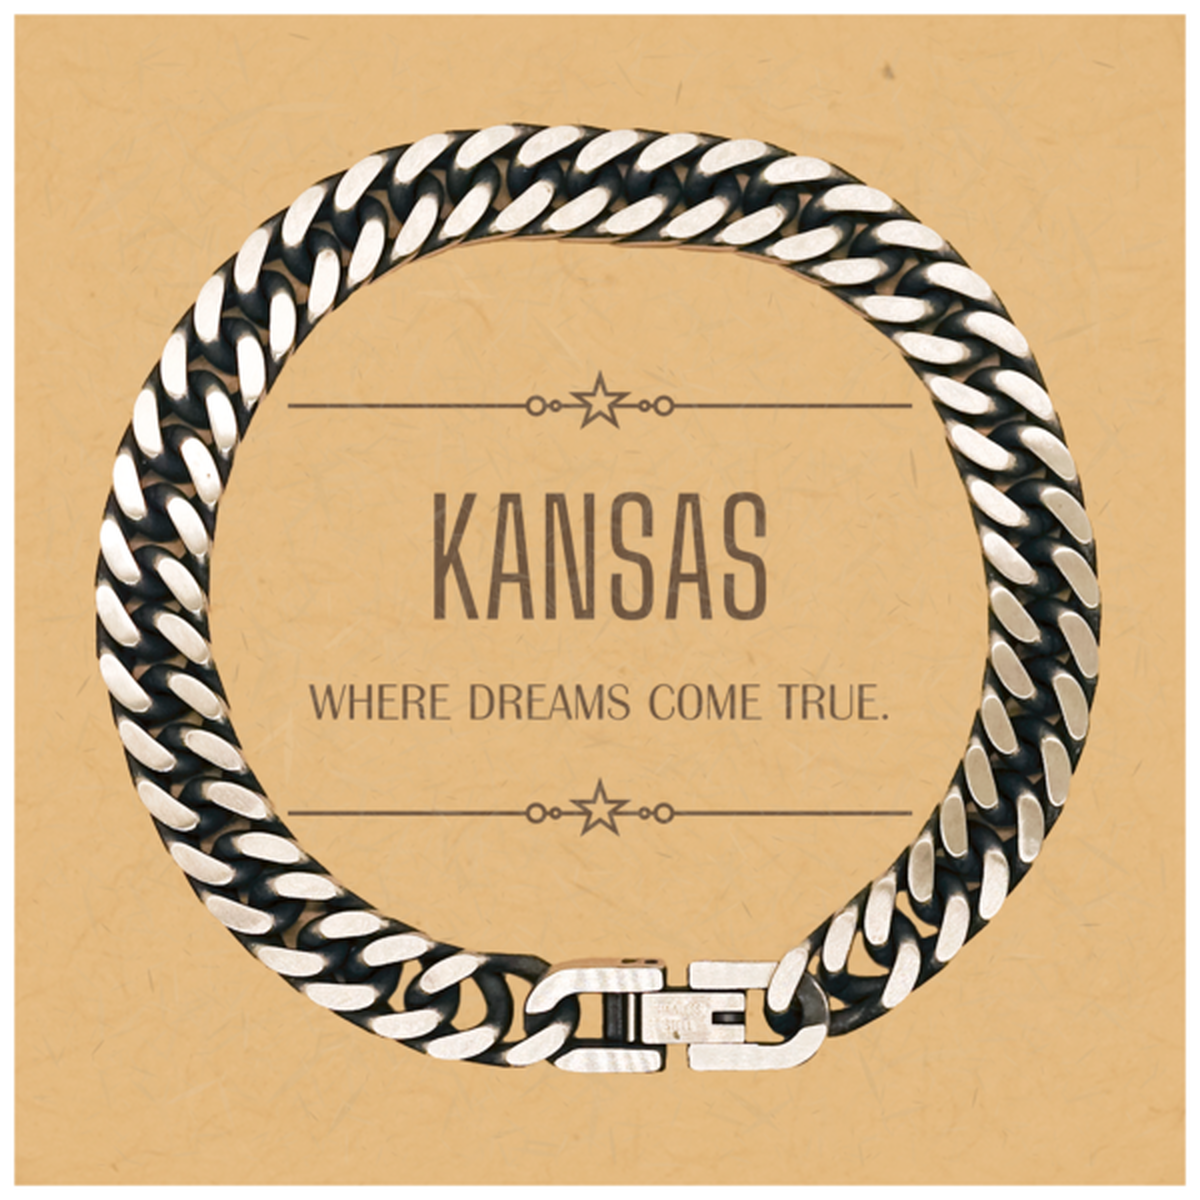 Love Kansas State Cuban Link Chain Bracelet, Kansas Where dreams come true, Birthday Christmas Inspirational Gifts For Kansas Men, Women, Friends